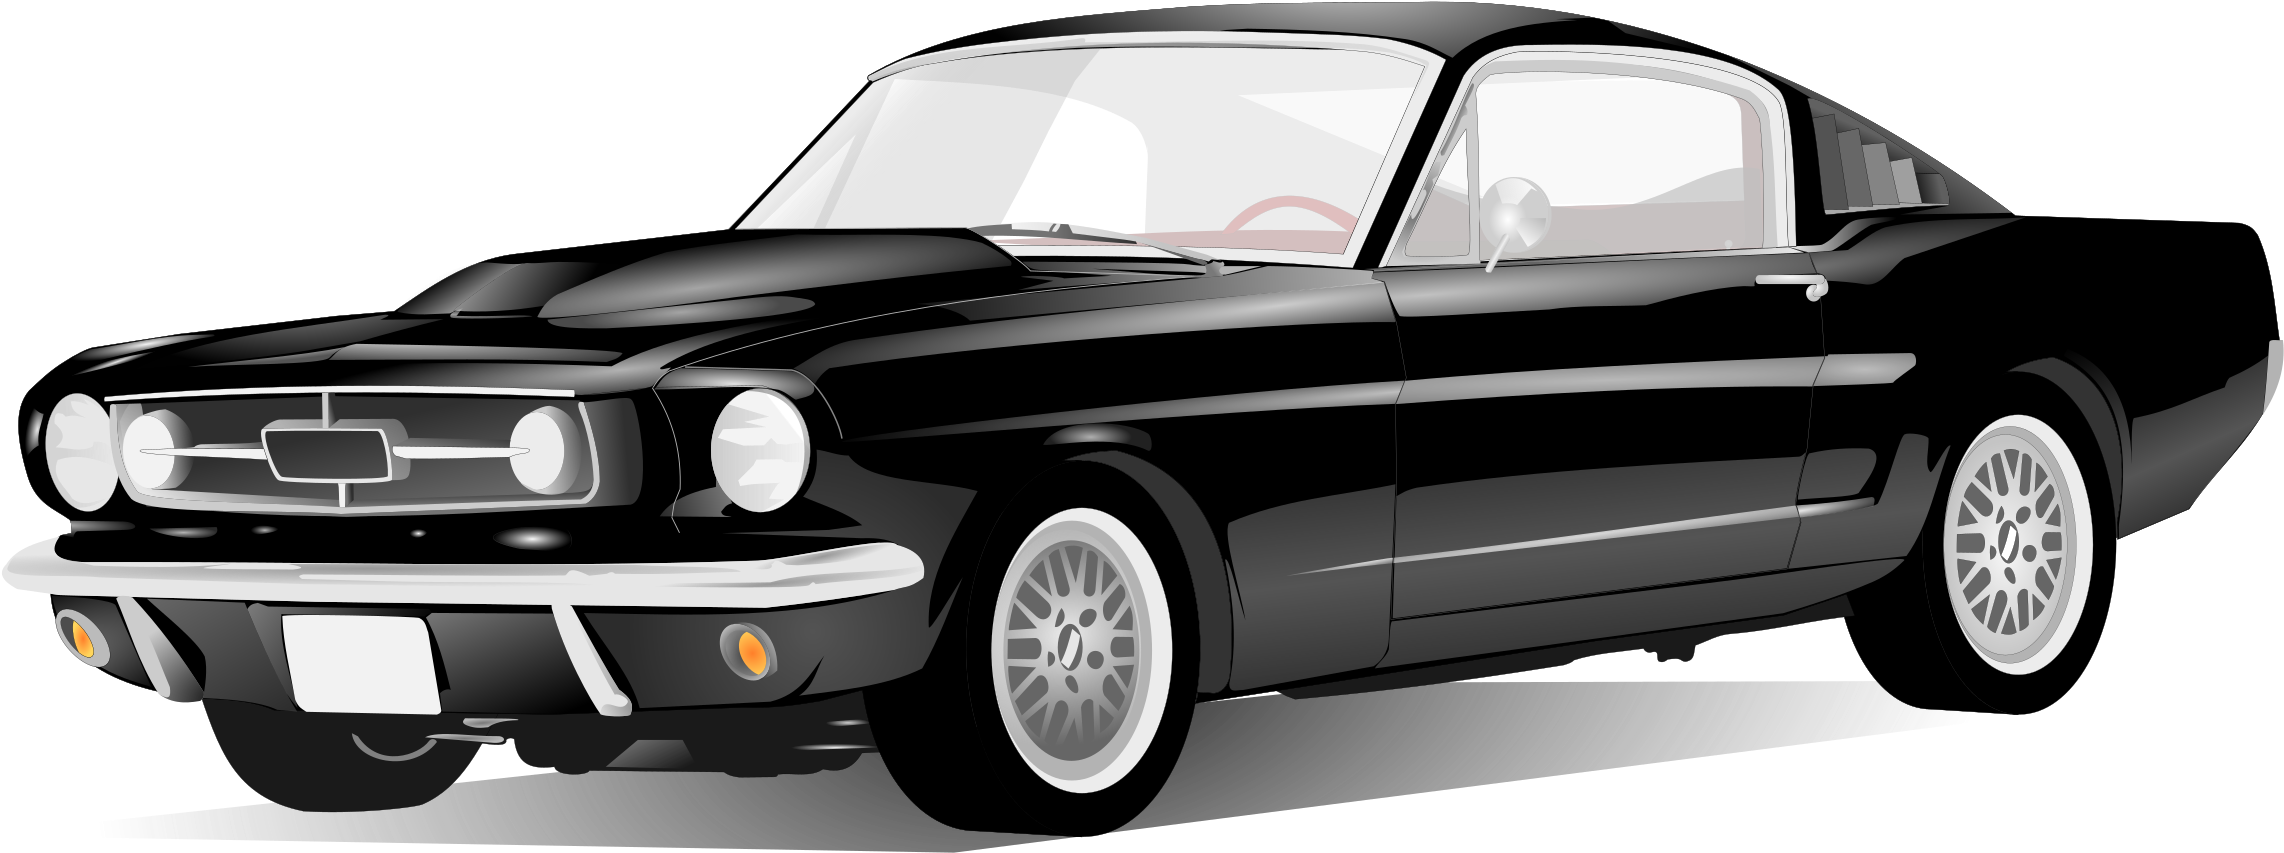 A Black Car With White Wheels